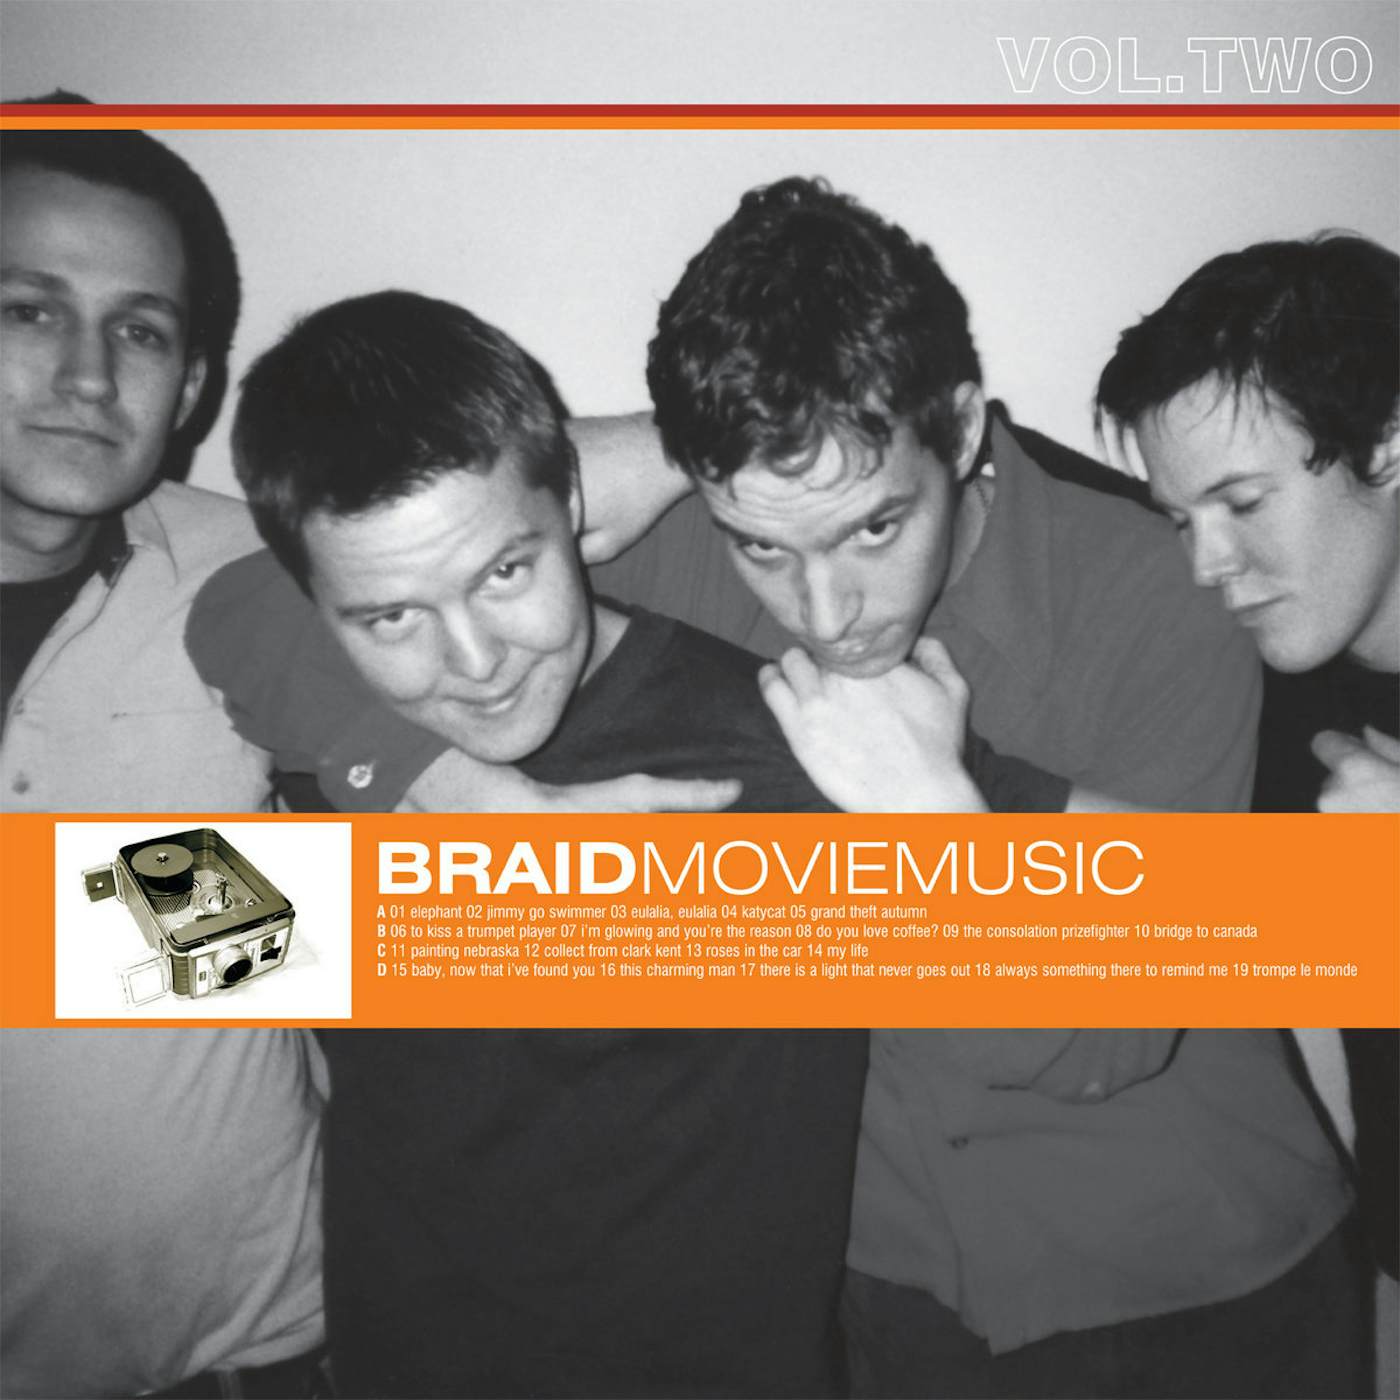 Braid Movie Music Vol. 2 (Vinyl)